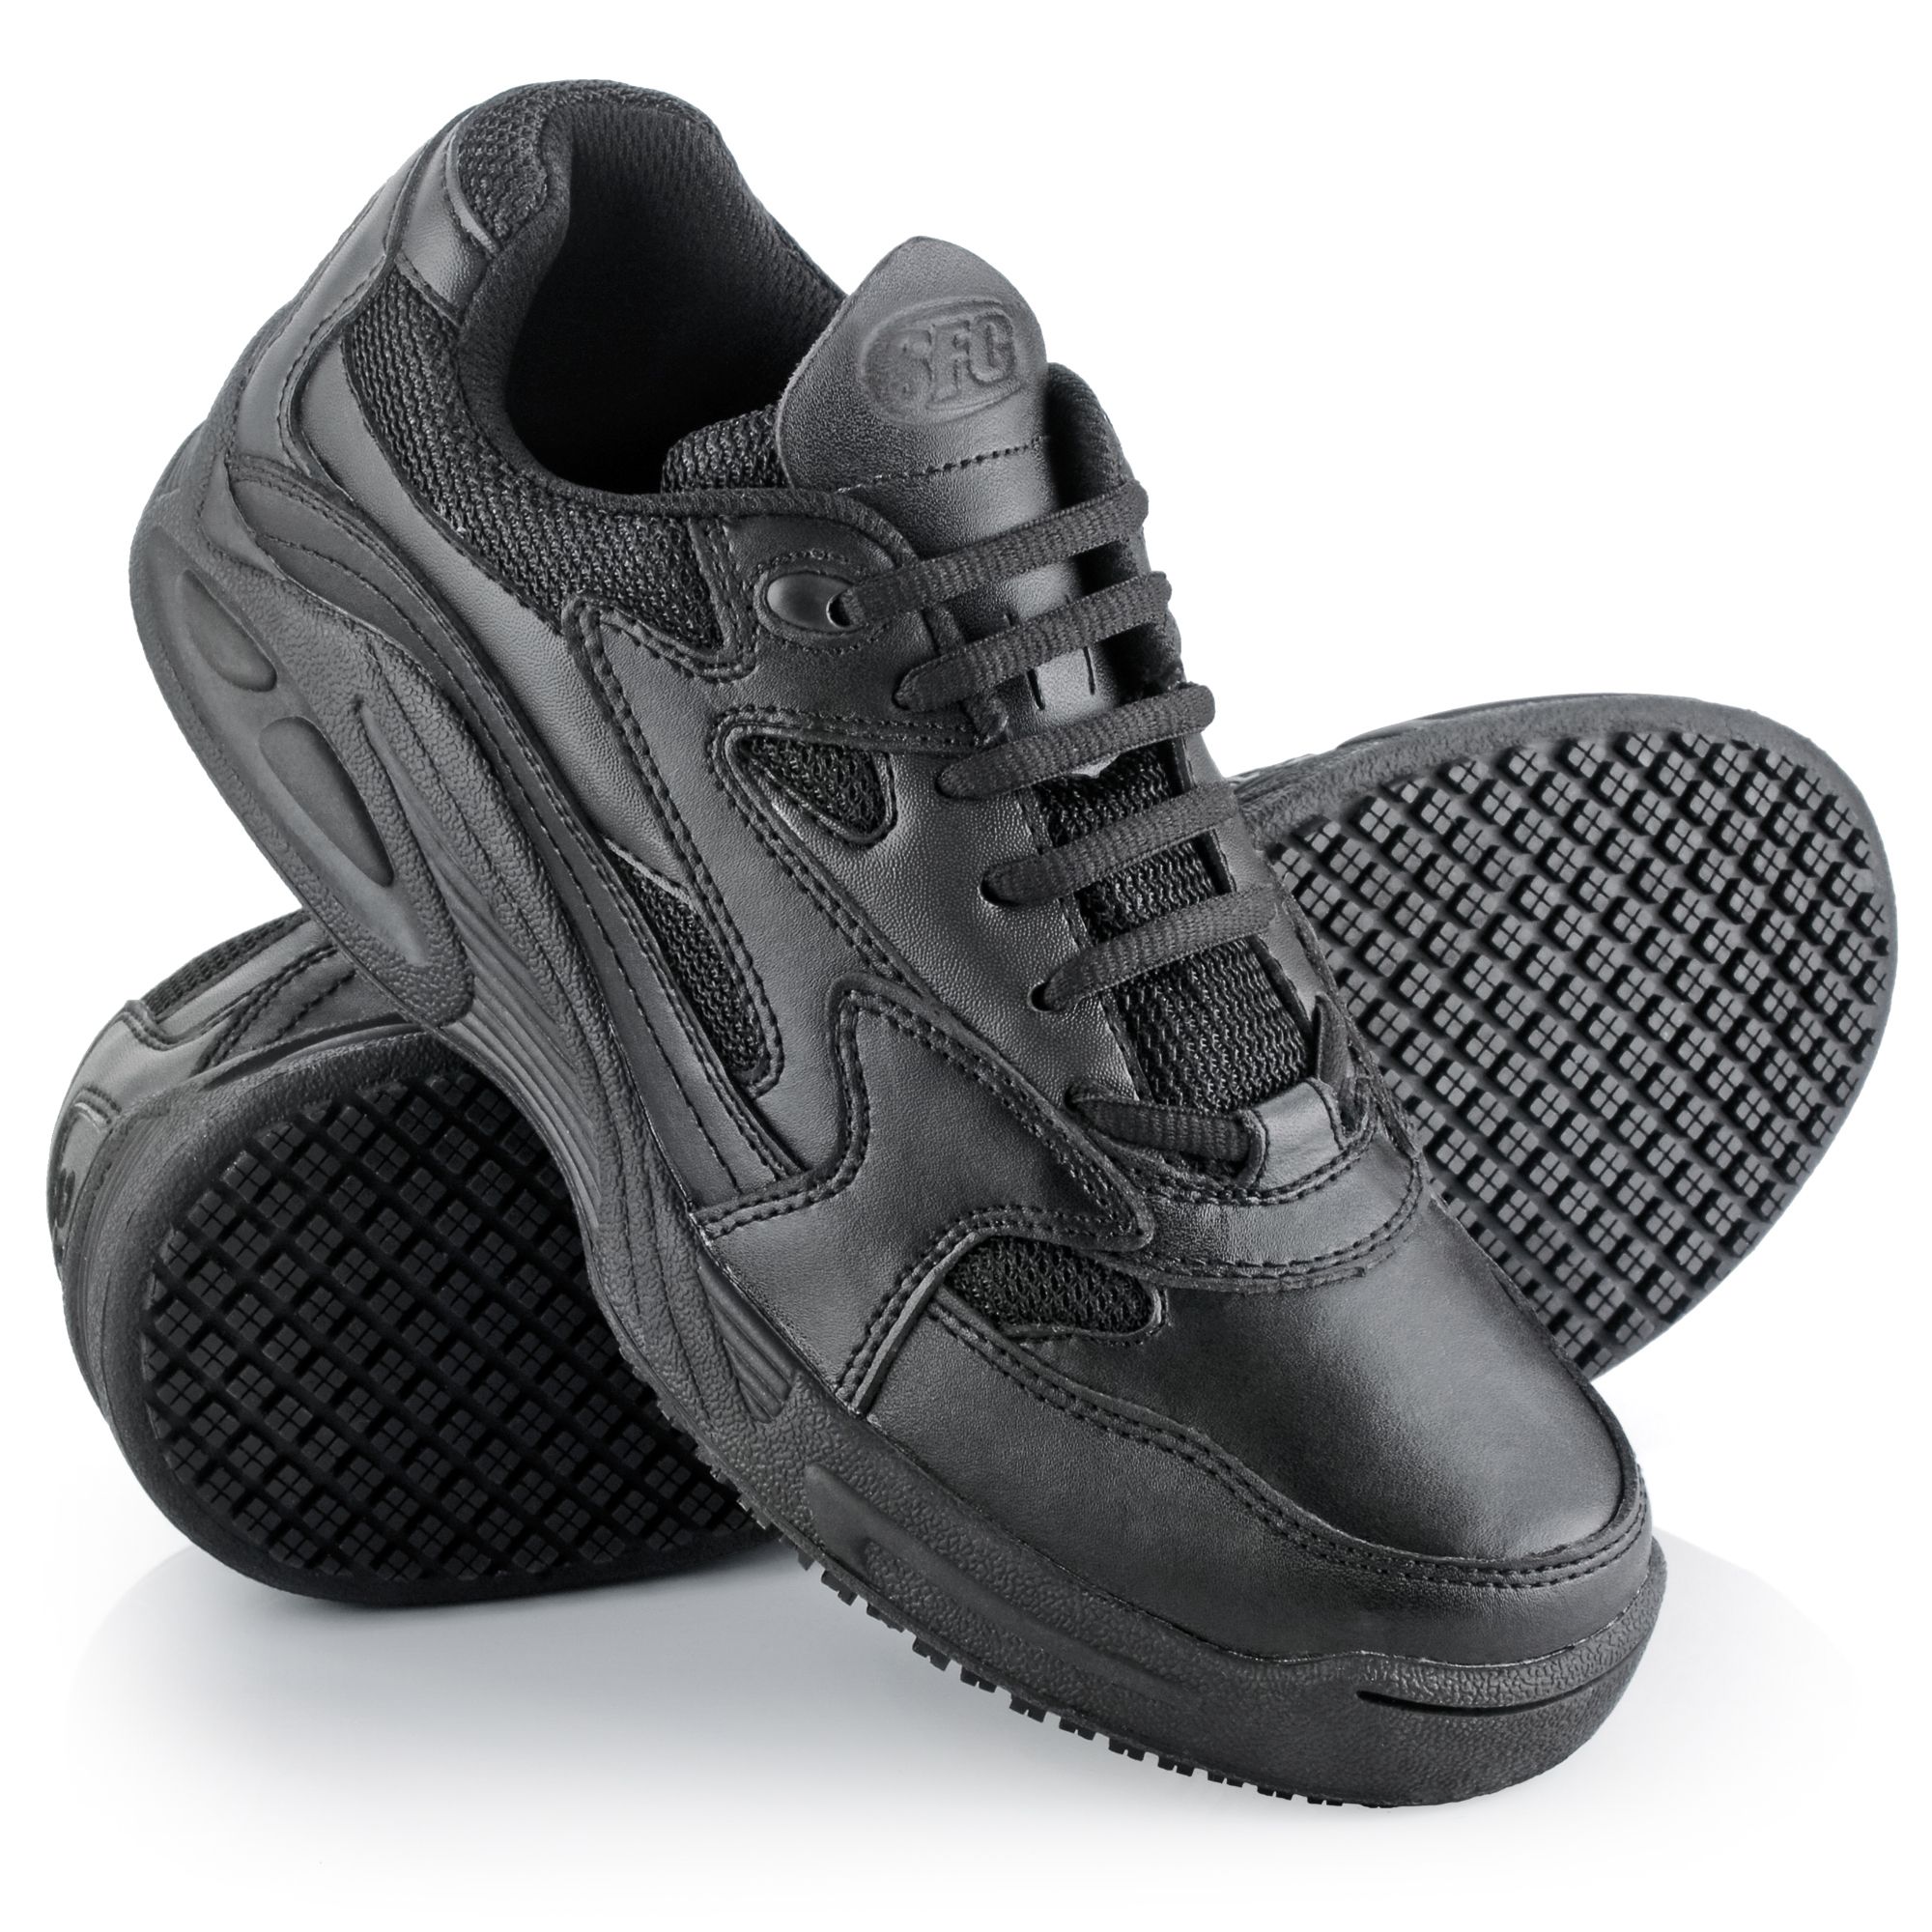 41.5 $69 Details about   SFC Shoes for Crews Aurora Black Leather 9043 Size 10